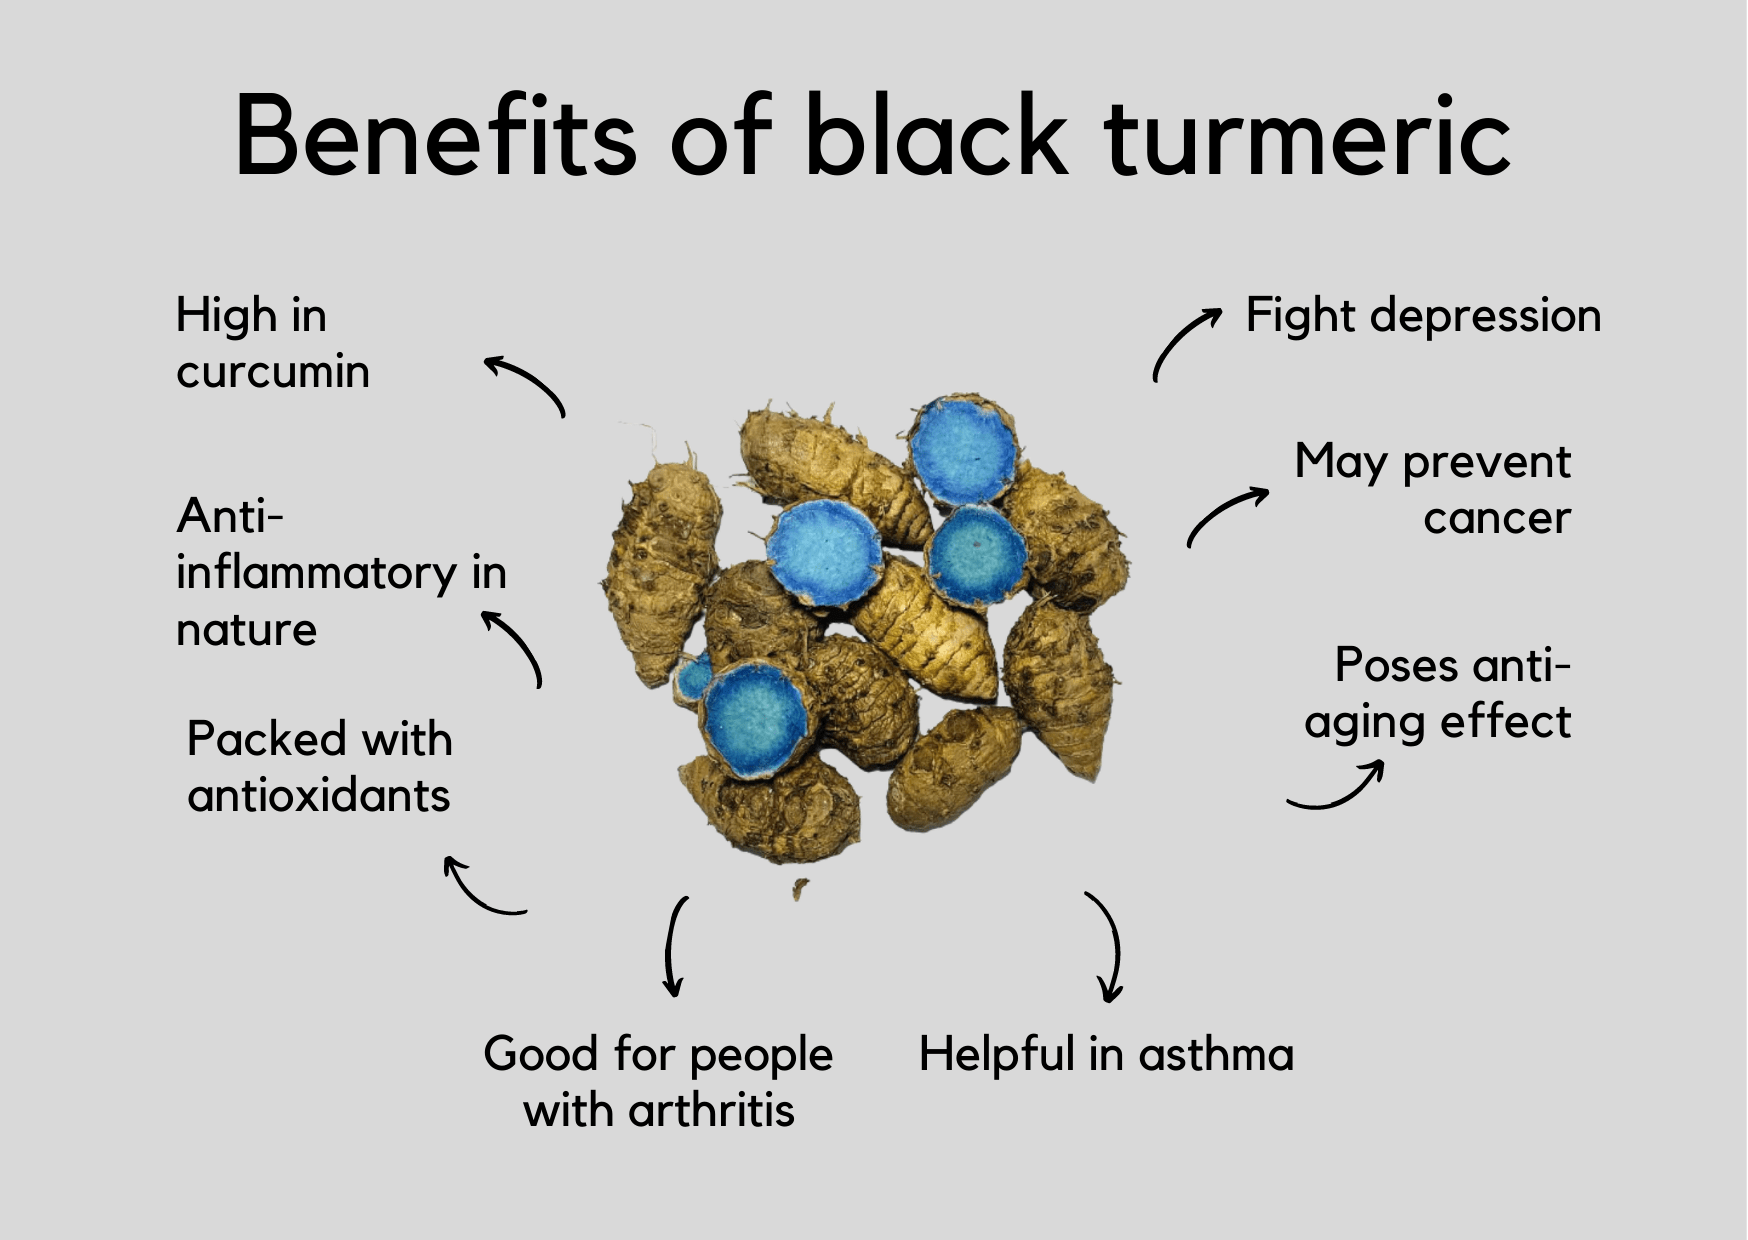 Black turmeric benefits